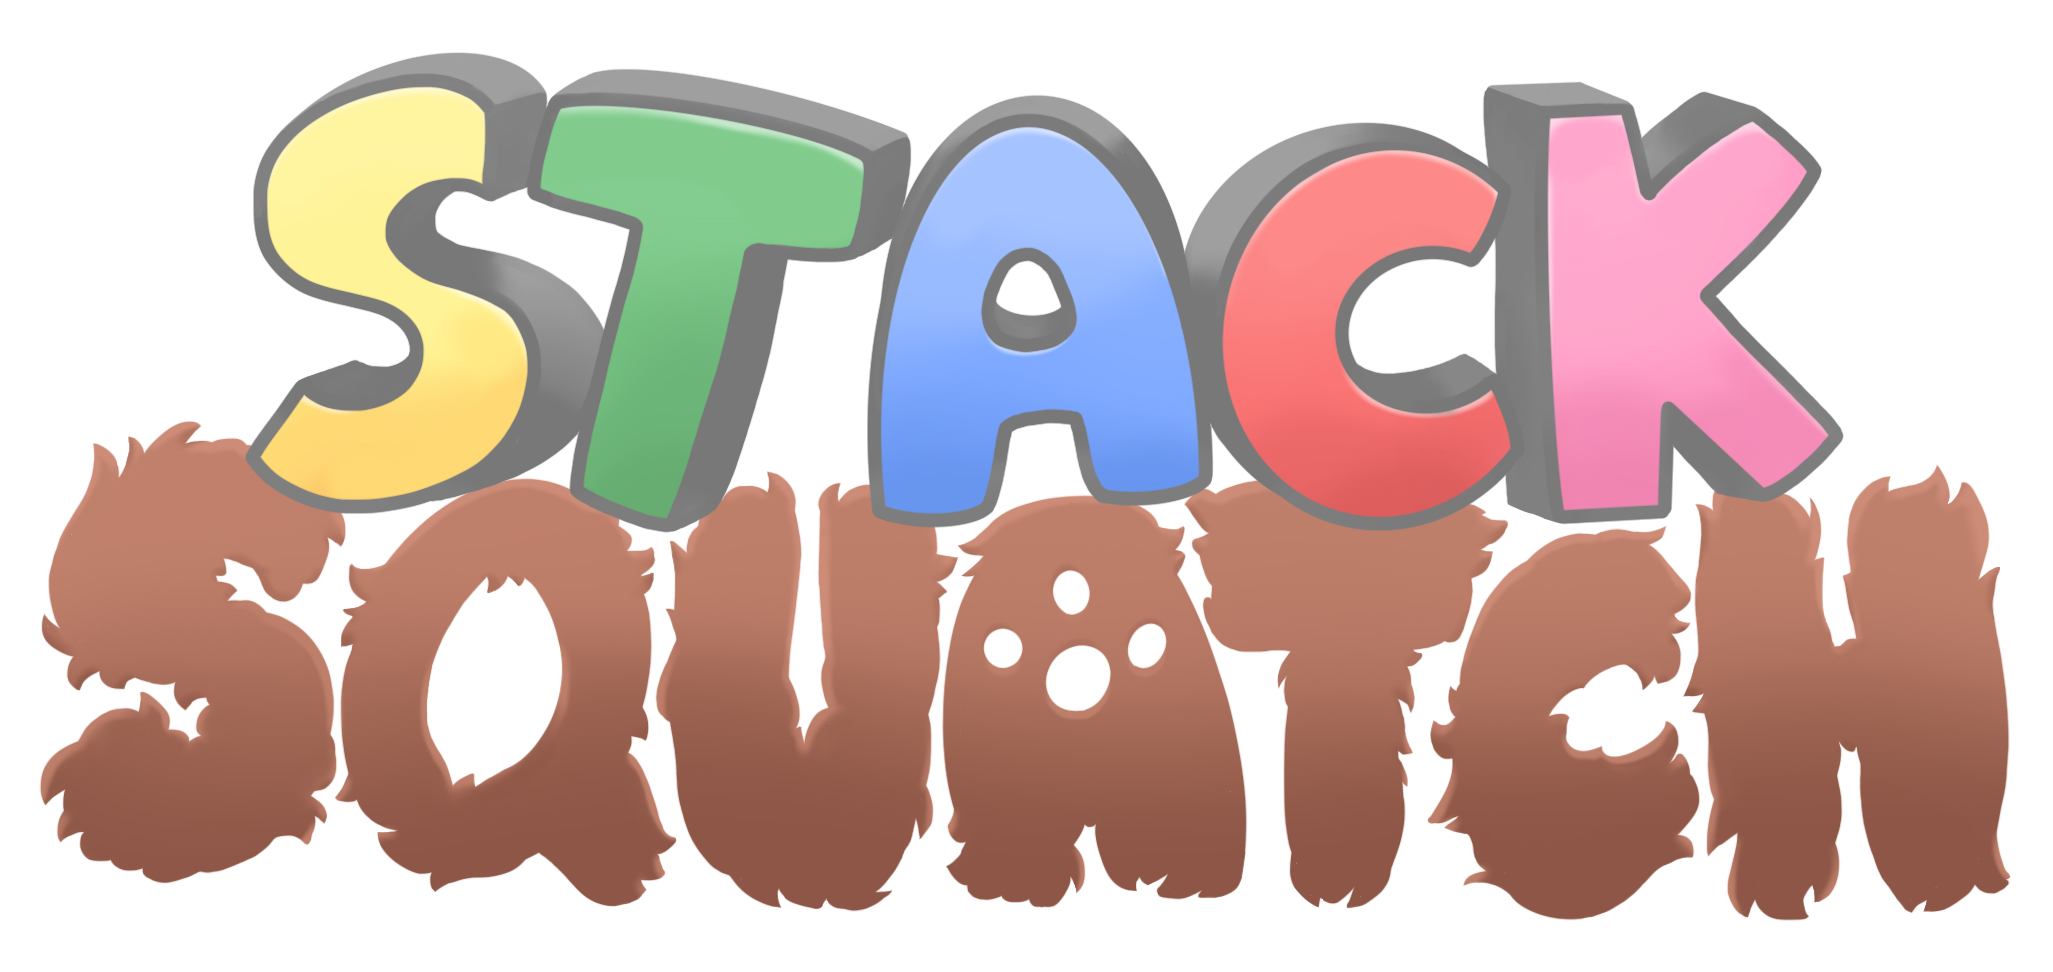 Stacksquatch logo